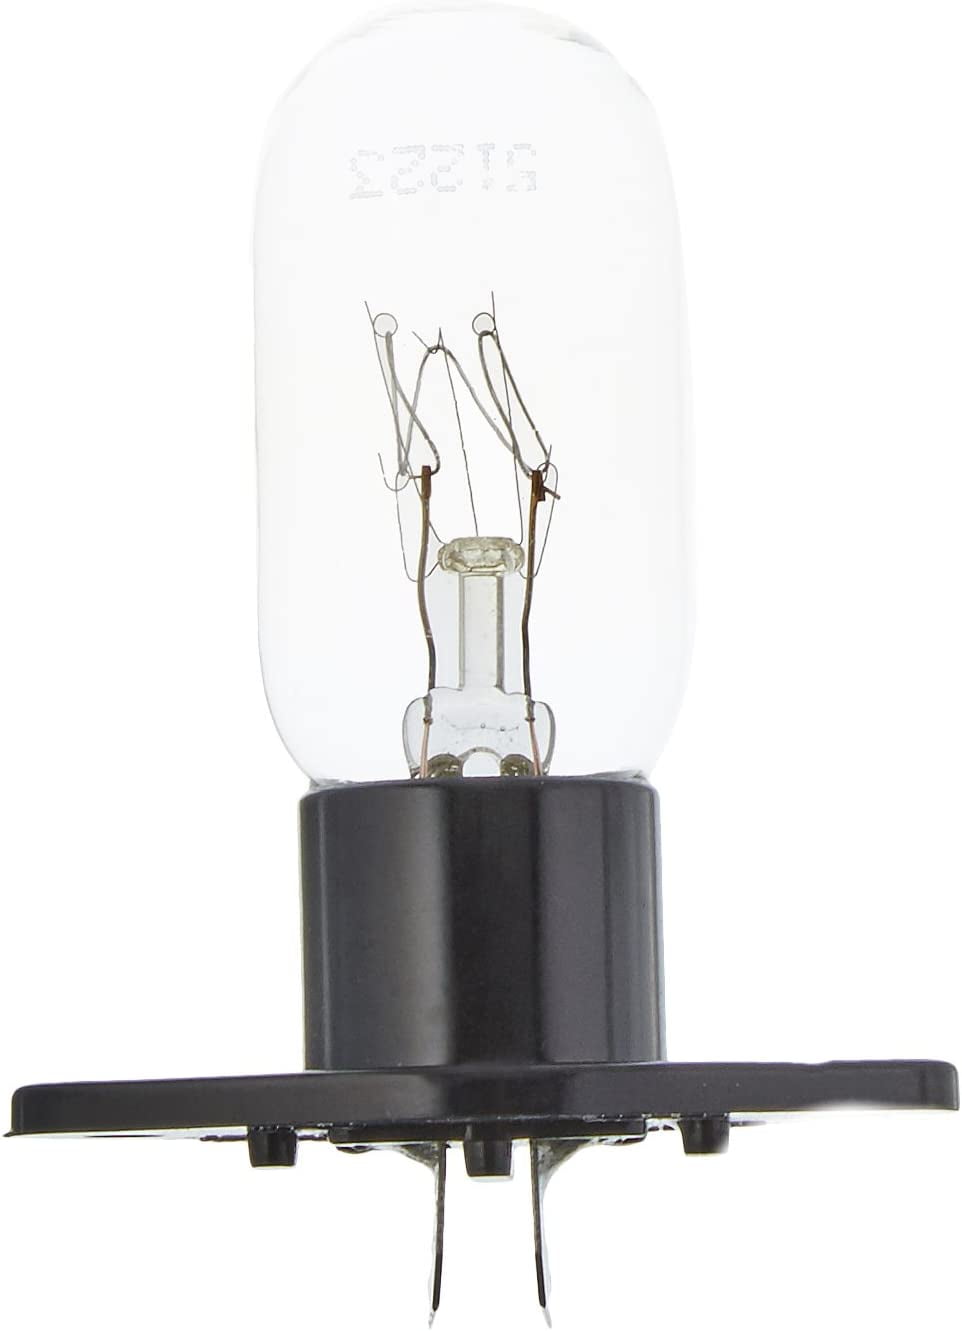 LG bombilla (lámpara) 25W incl. soporte horno/microondas combinado  6912W3B002D